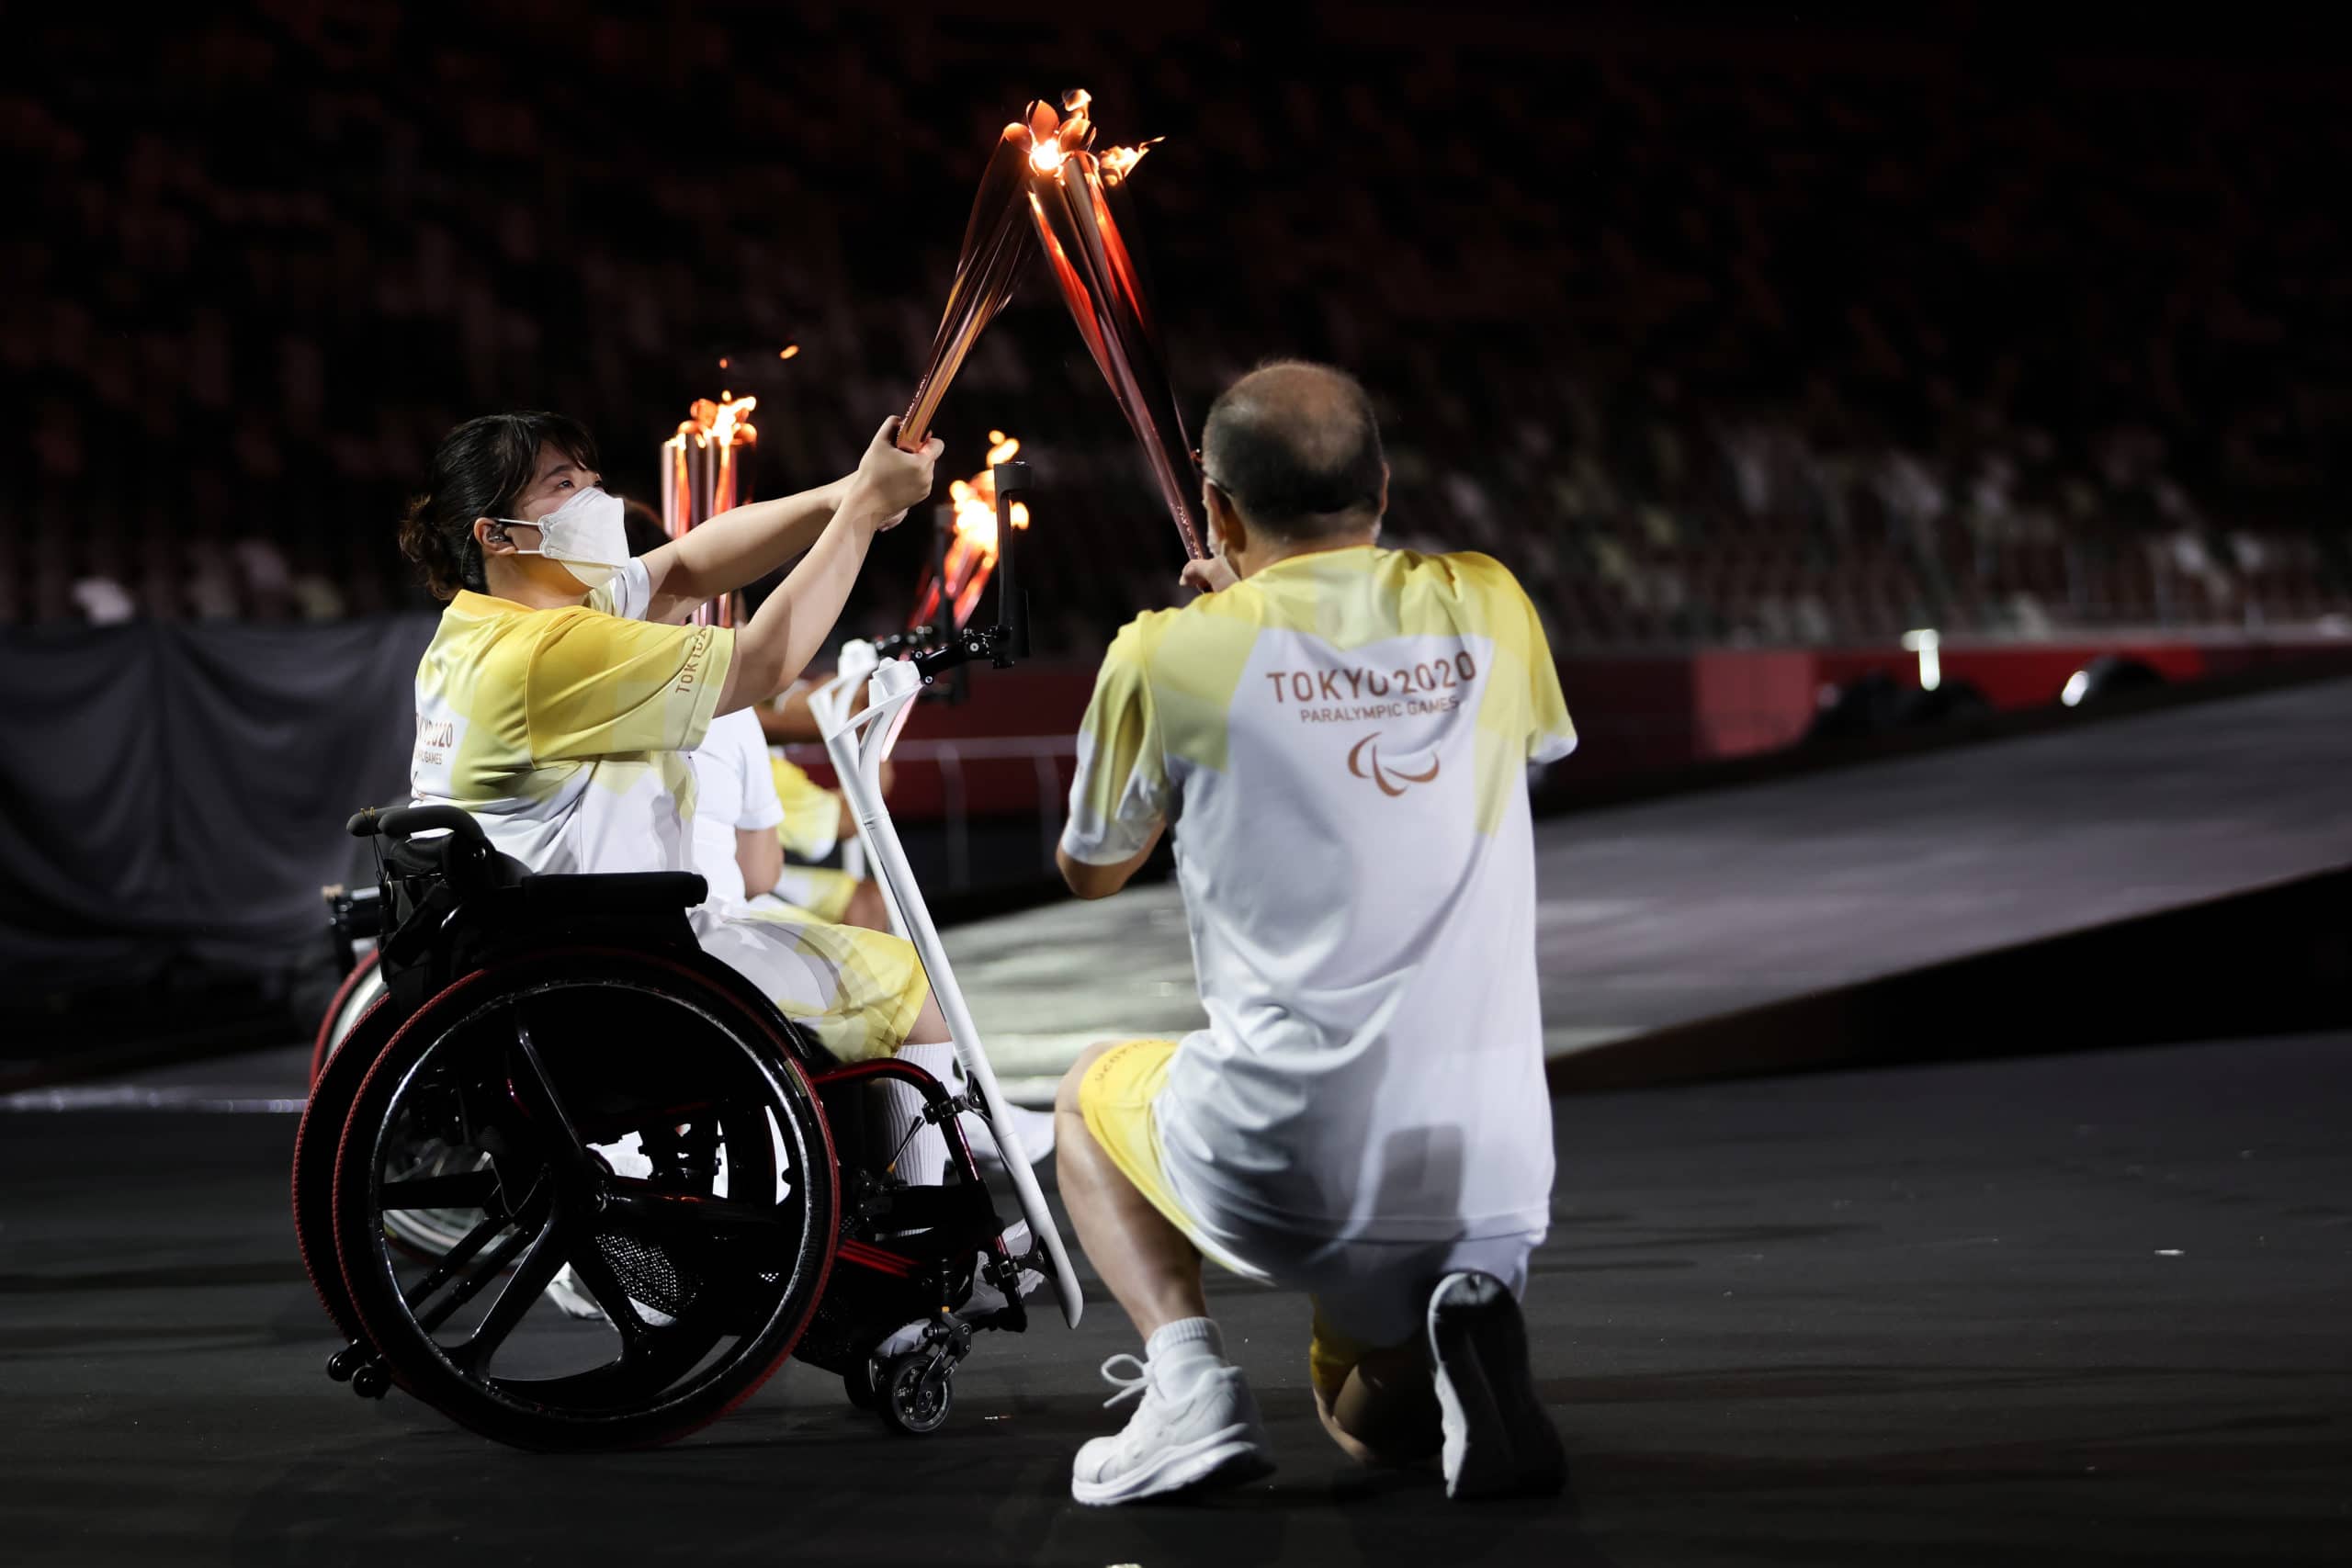 Paralympics – Opening Ceremony